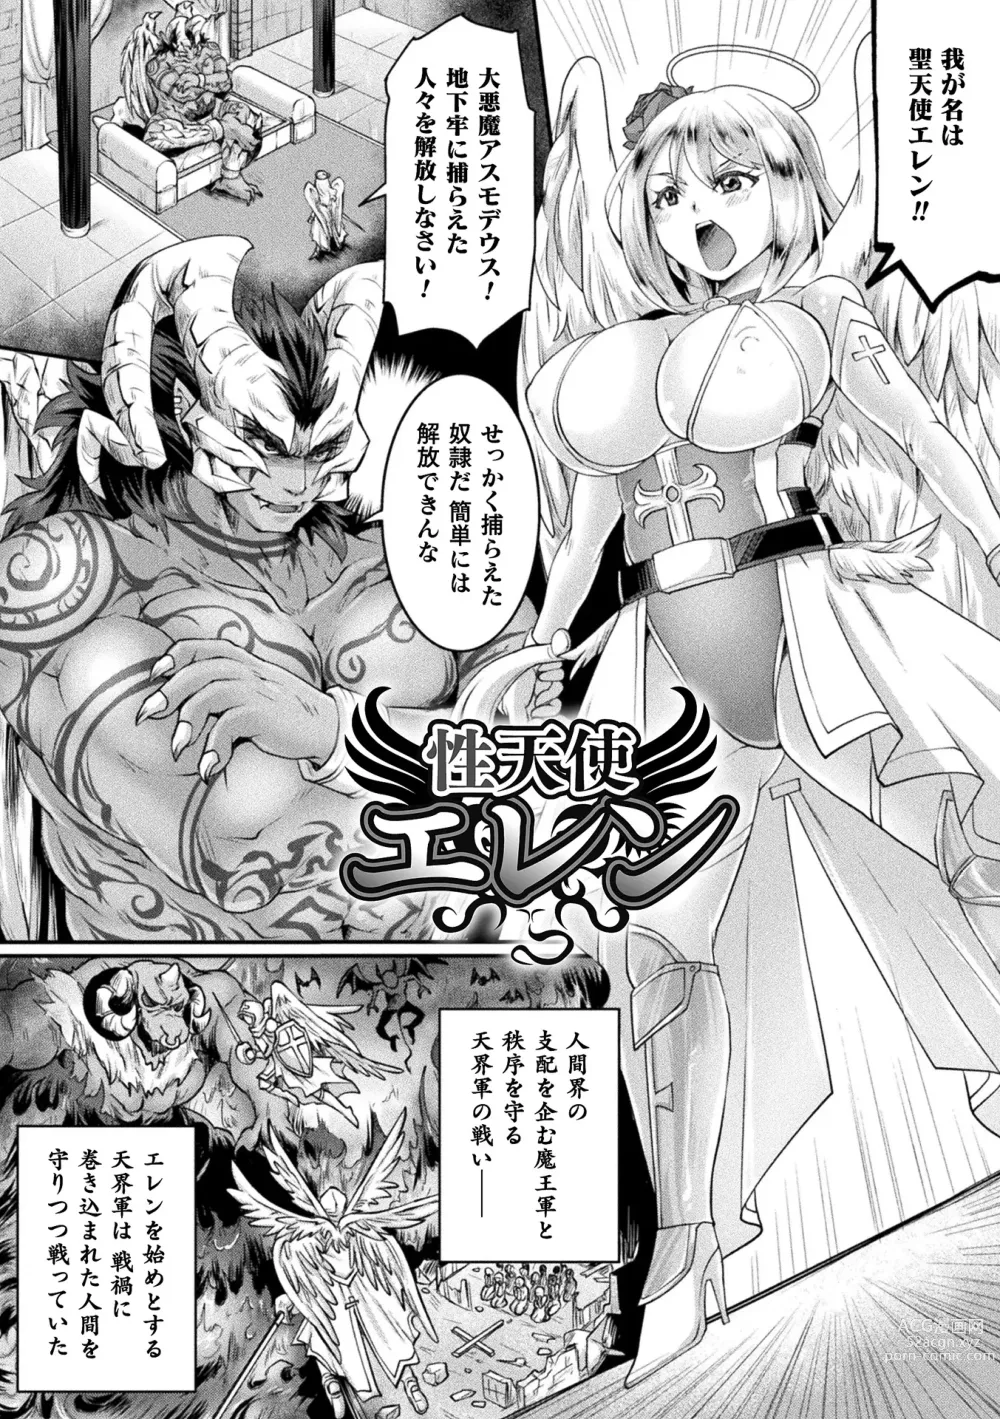 Page 5 of manga Seigi Dain Unmoral